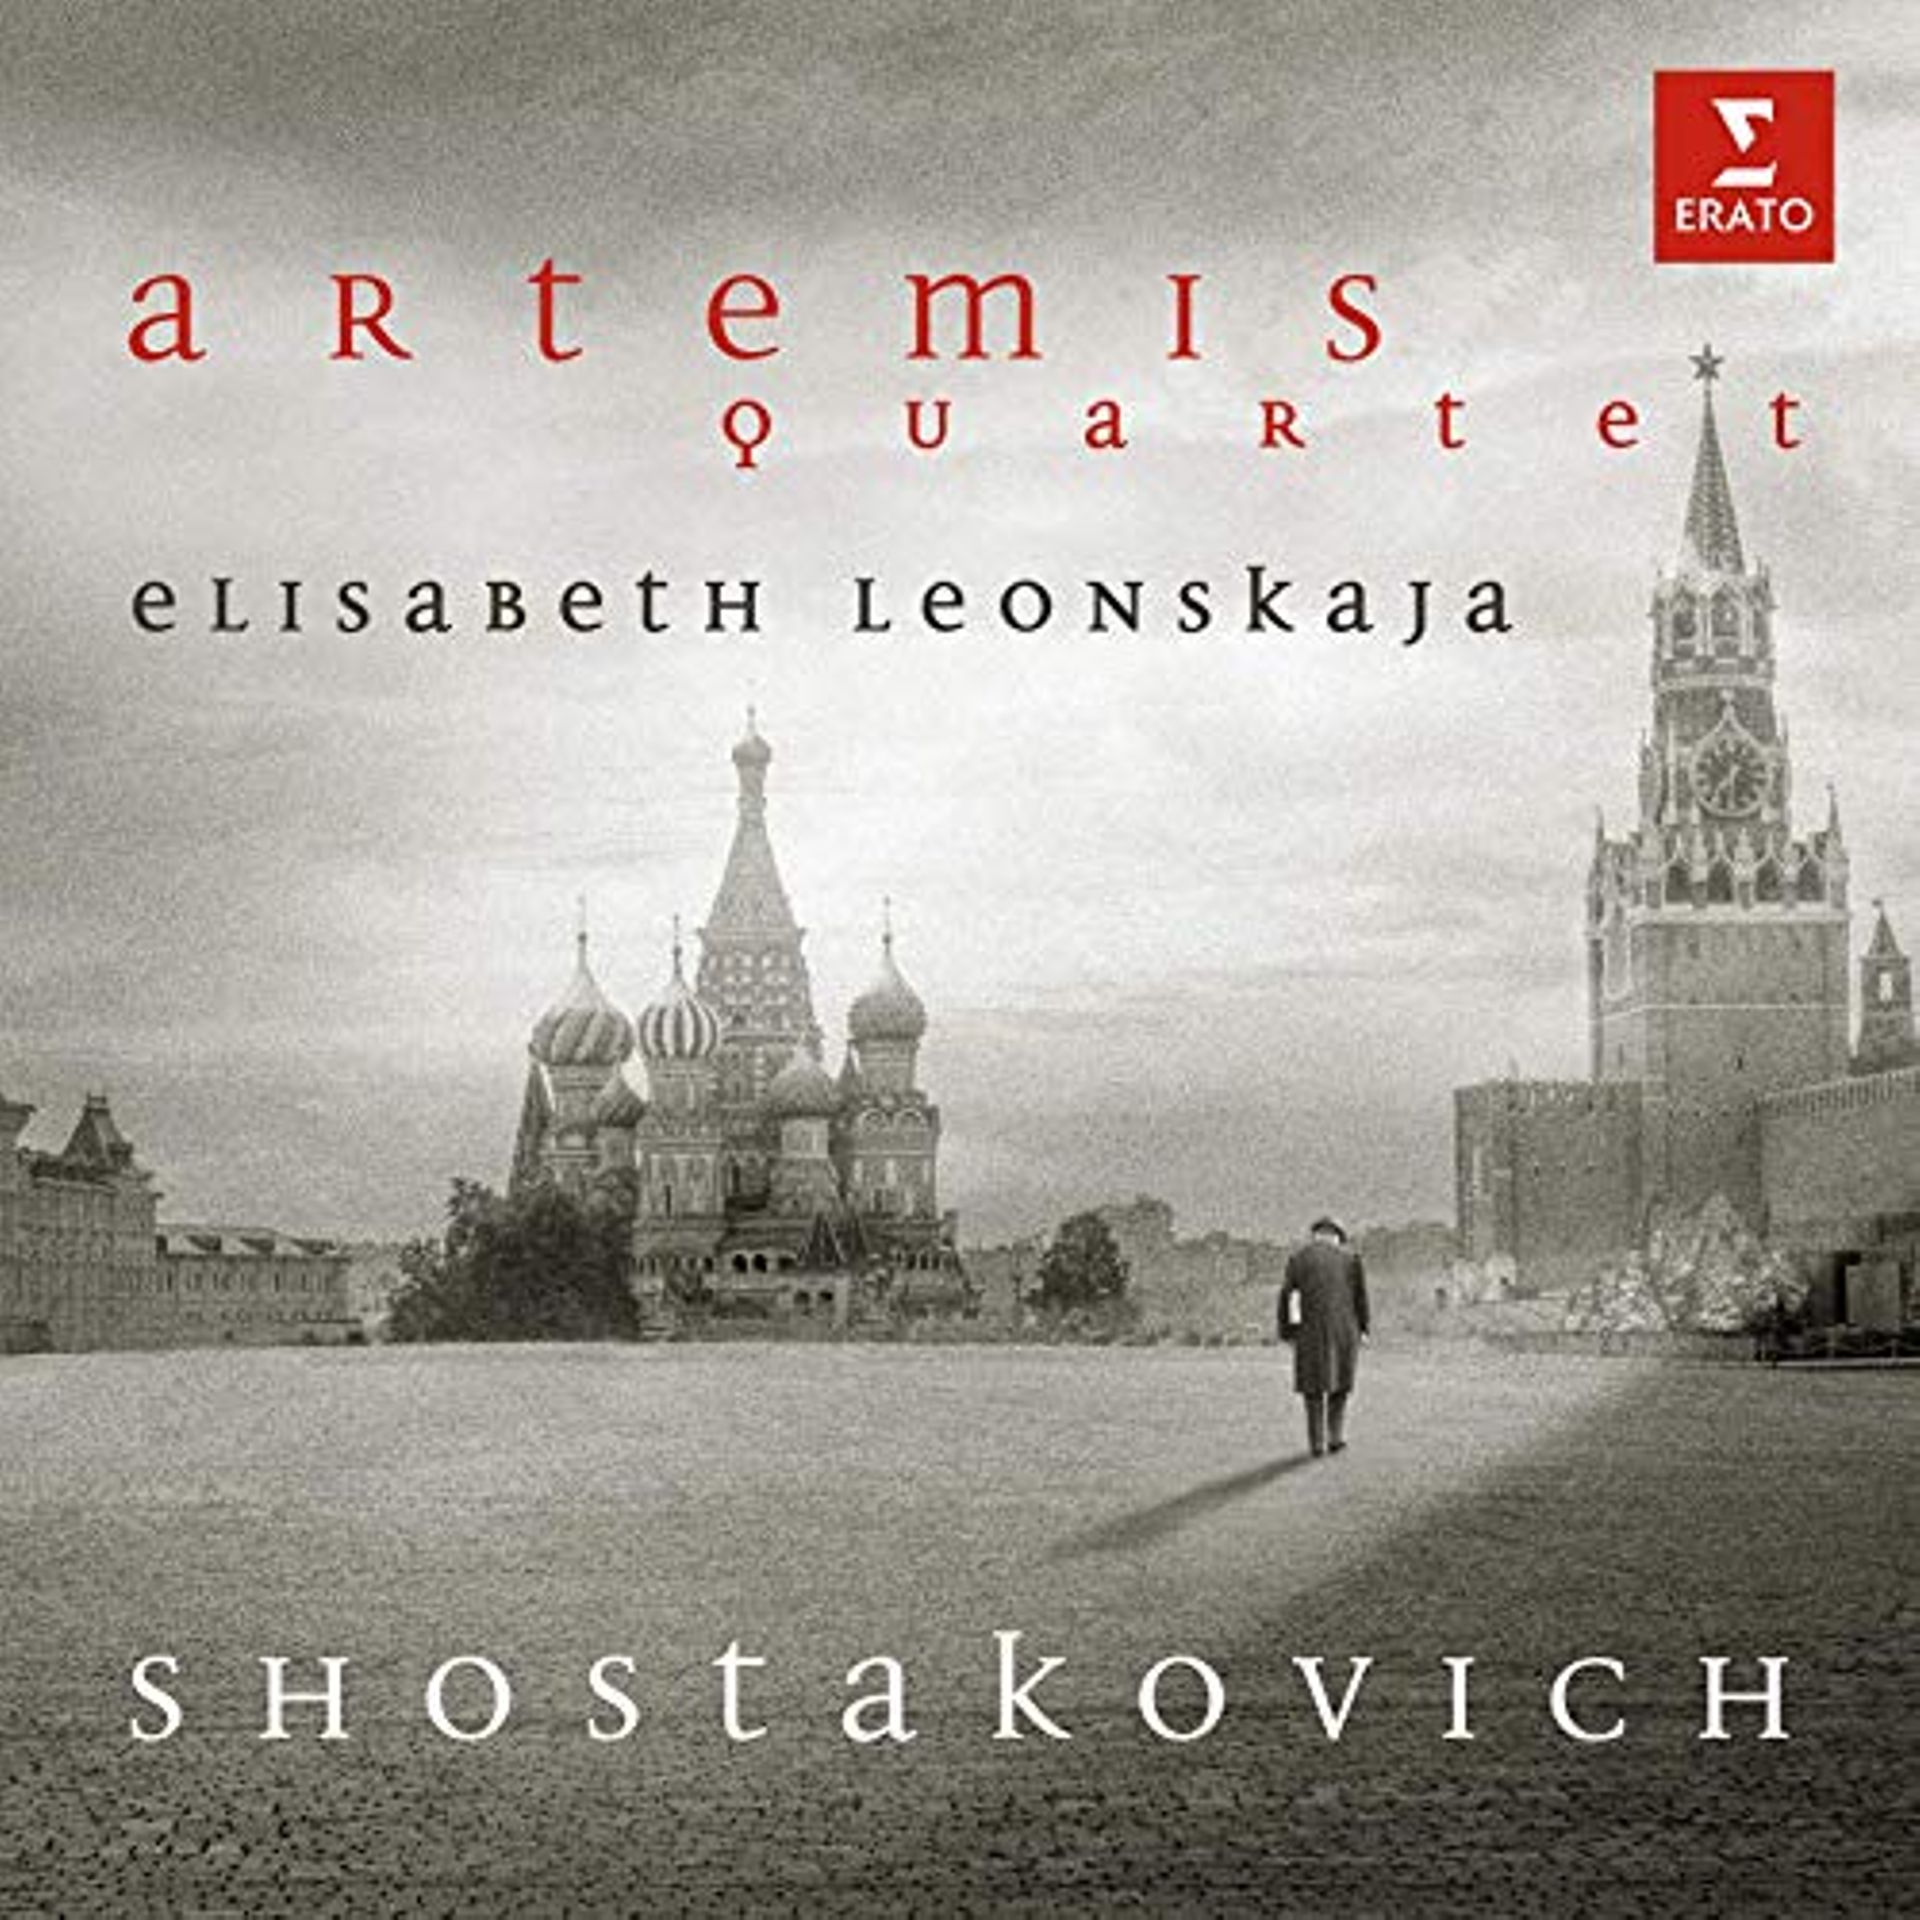 Dmitri Shostakovich - String Quartets 5 & 7, Piano Quintet par Artemis Quartet, Elisabeth Leonskaja chez Erato